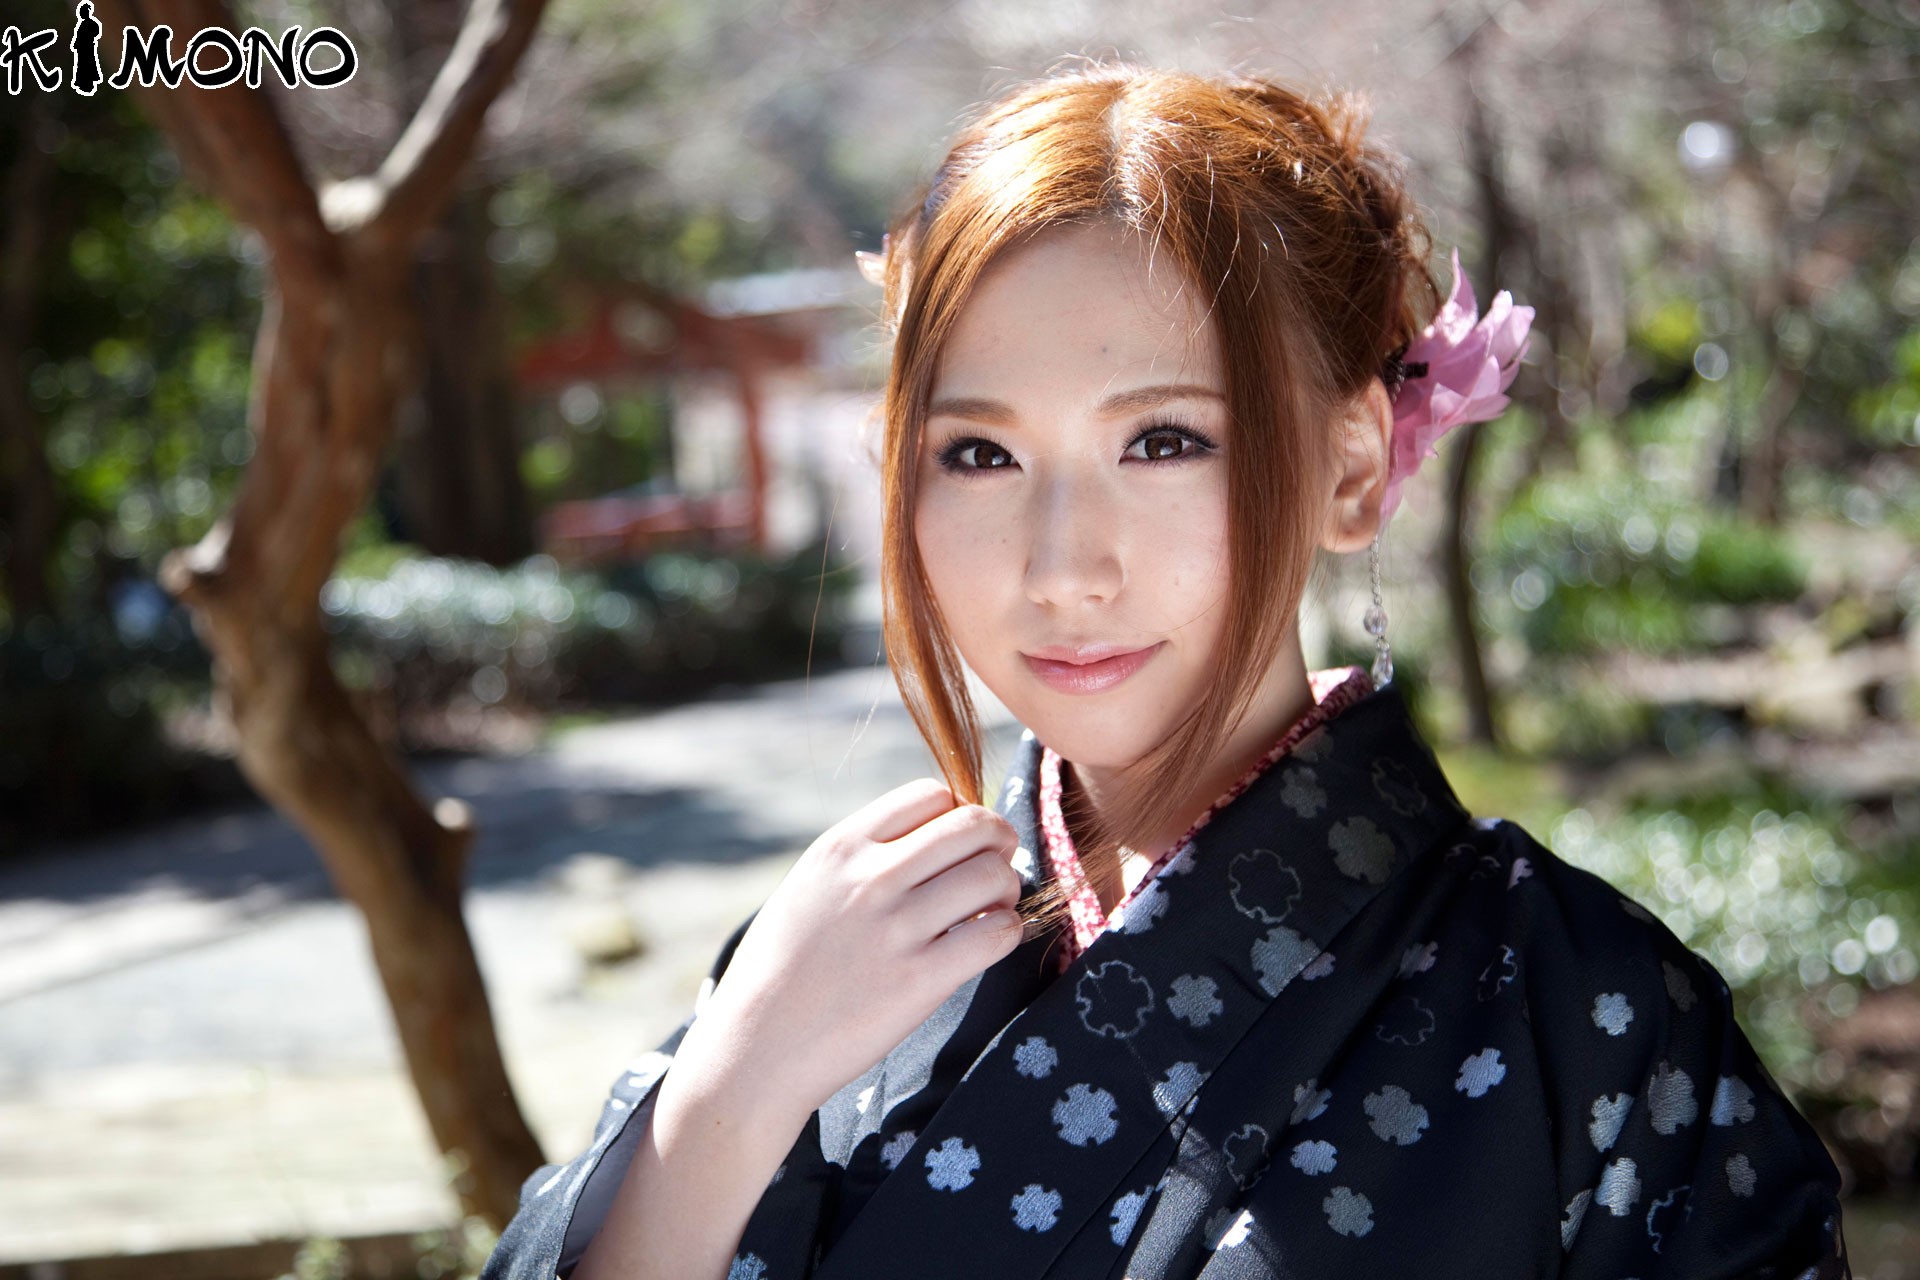 models, Japanese, kimono, Japanese clothes, cities, Ai Sayama - desktop wallpaper